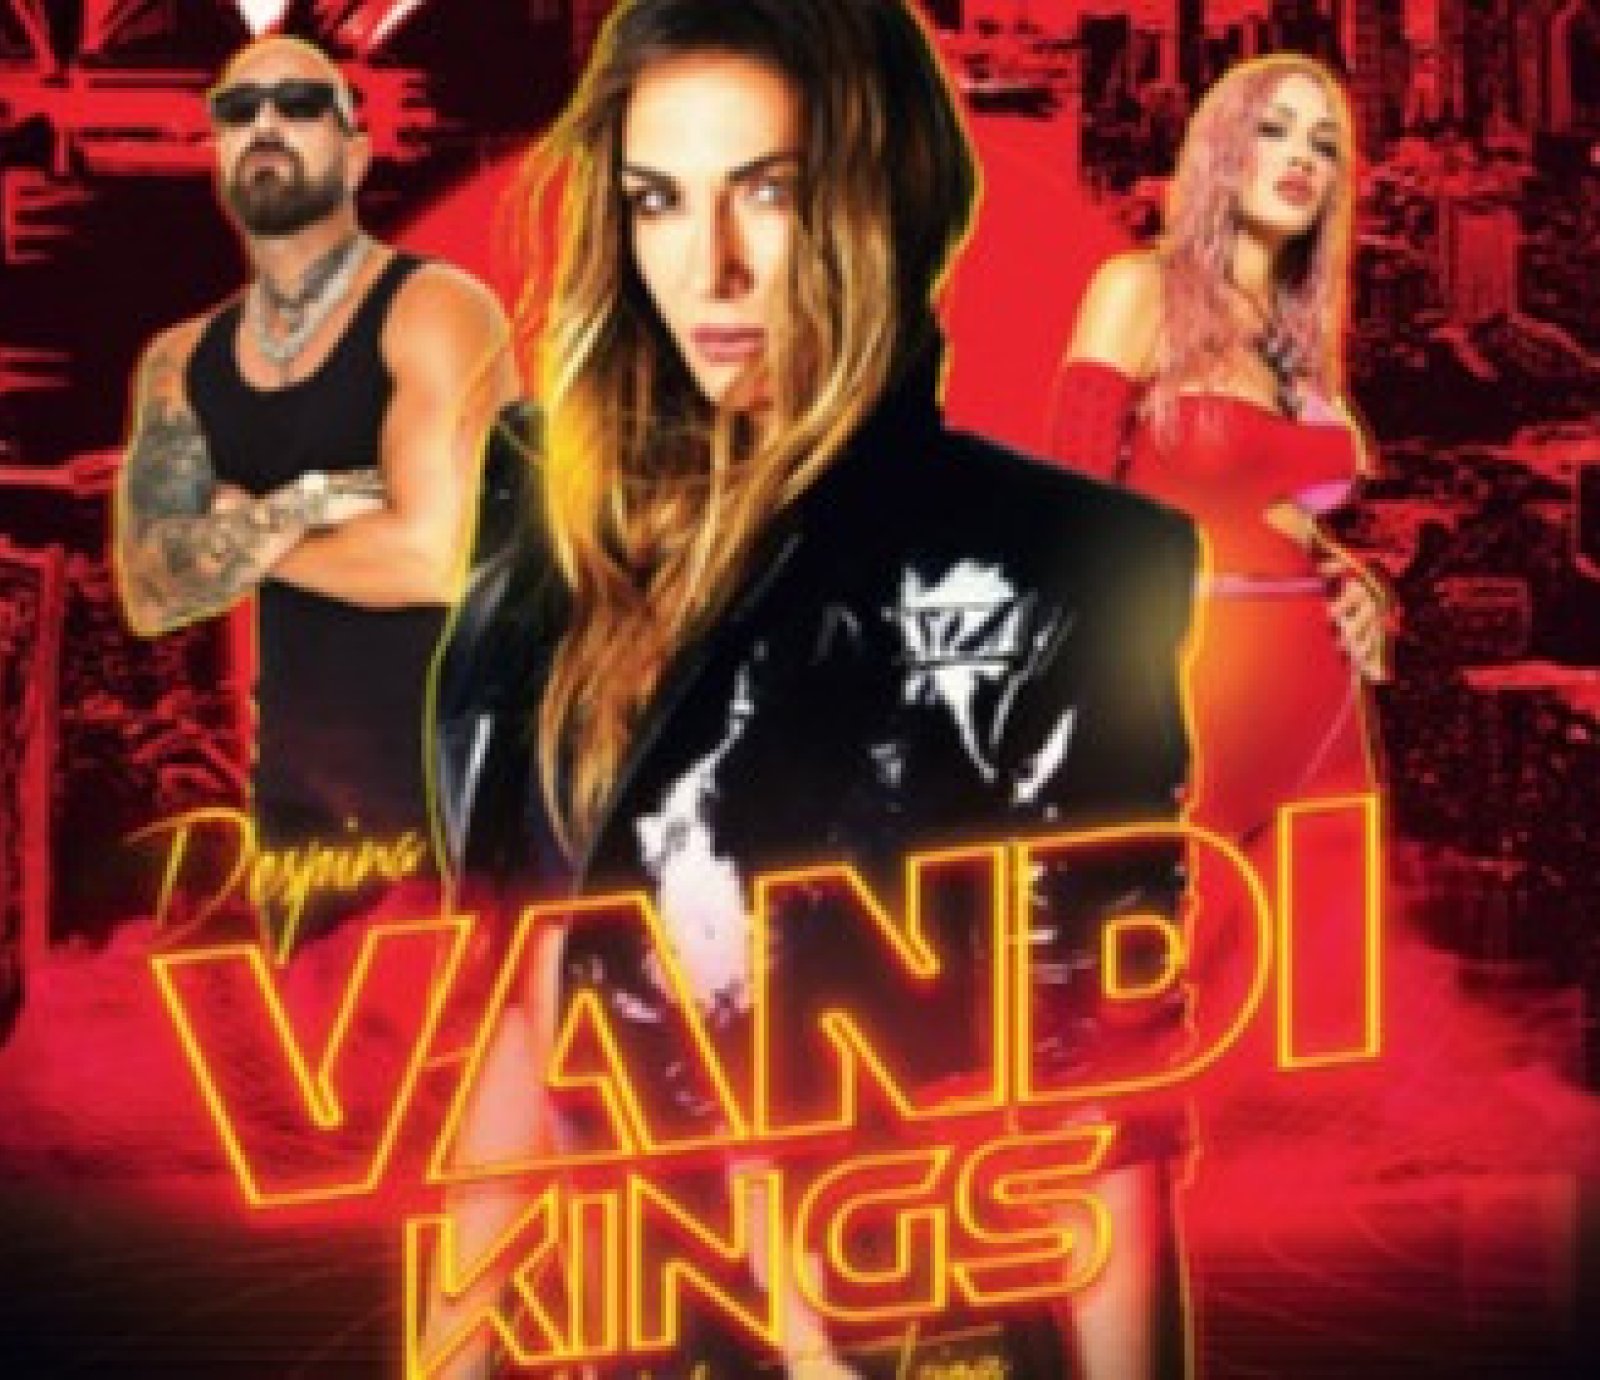 Despina Vandi & Kings